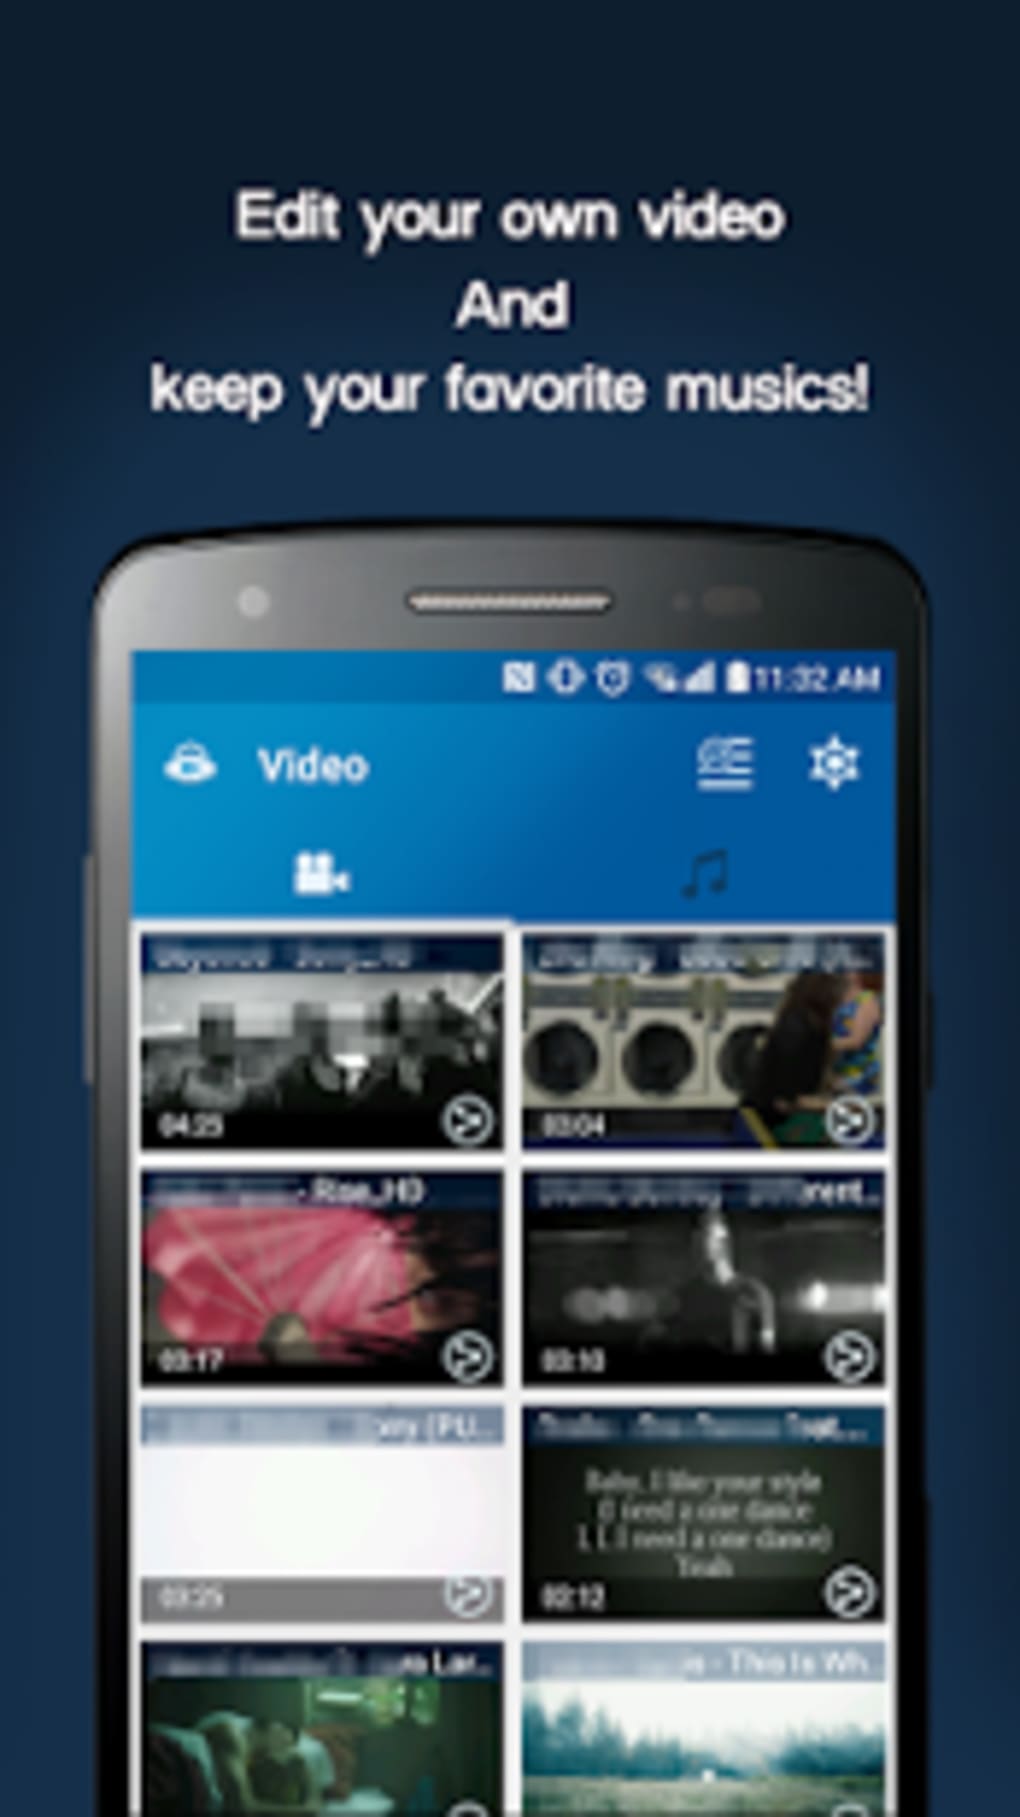 mp3 video converter app free download mac